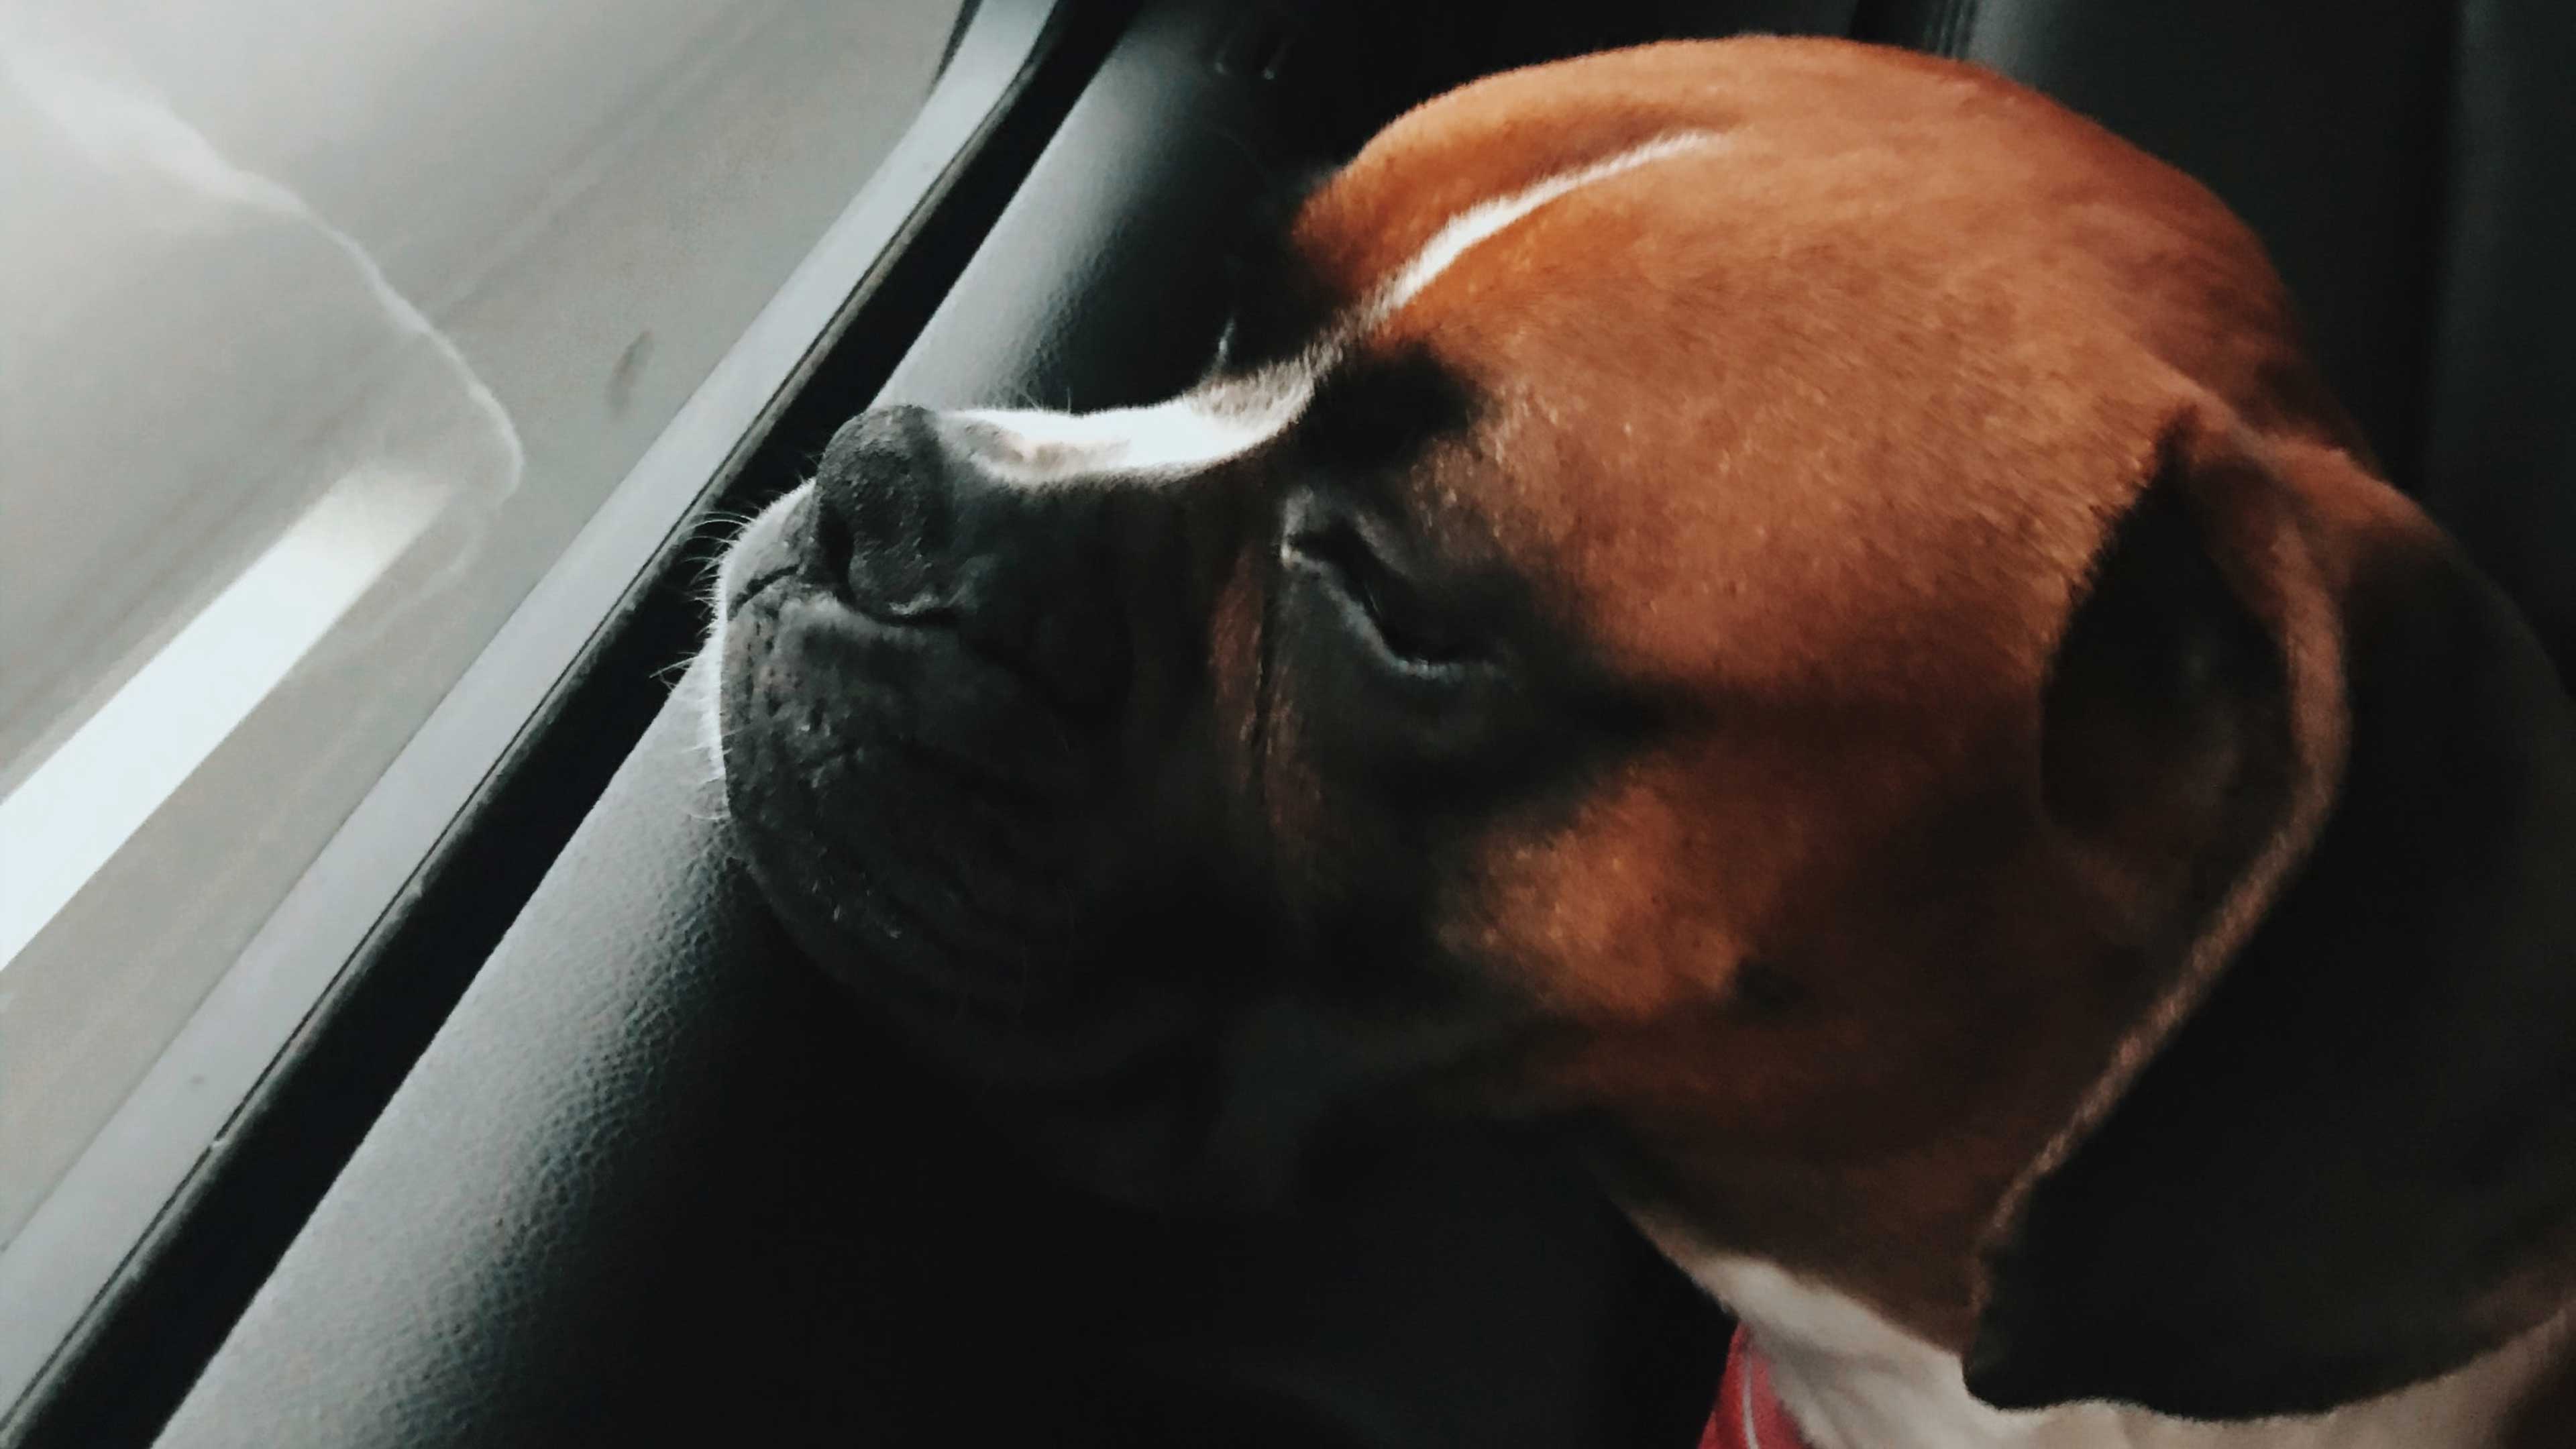 7 Accesorios básicos para viajar en coche con perro - Pinna the corgi